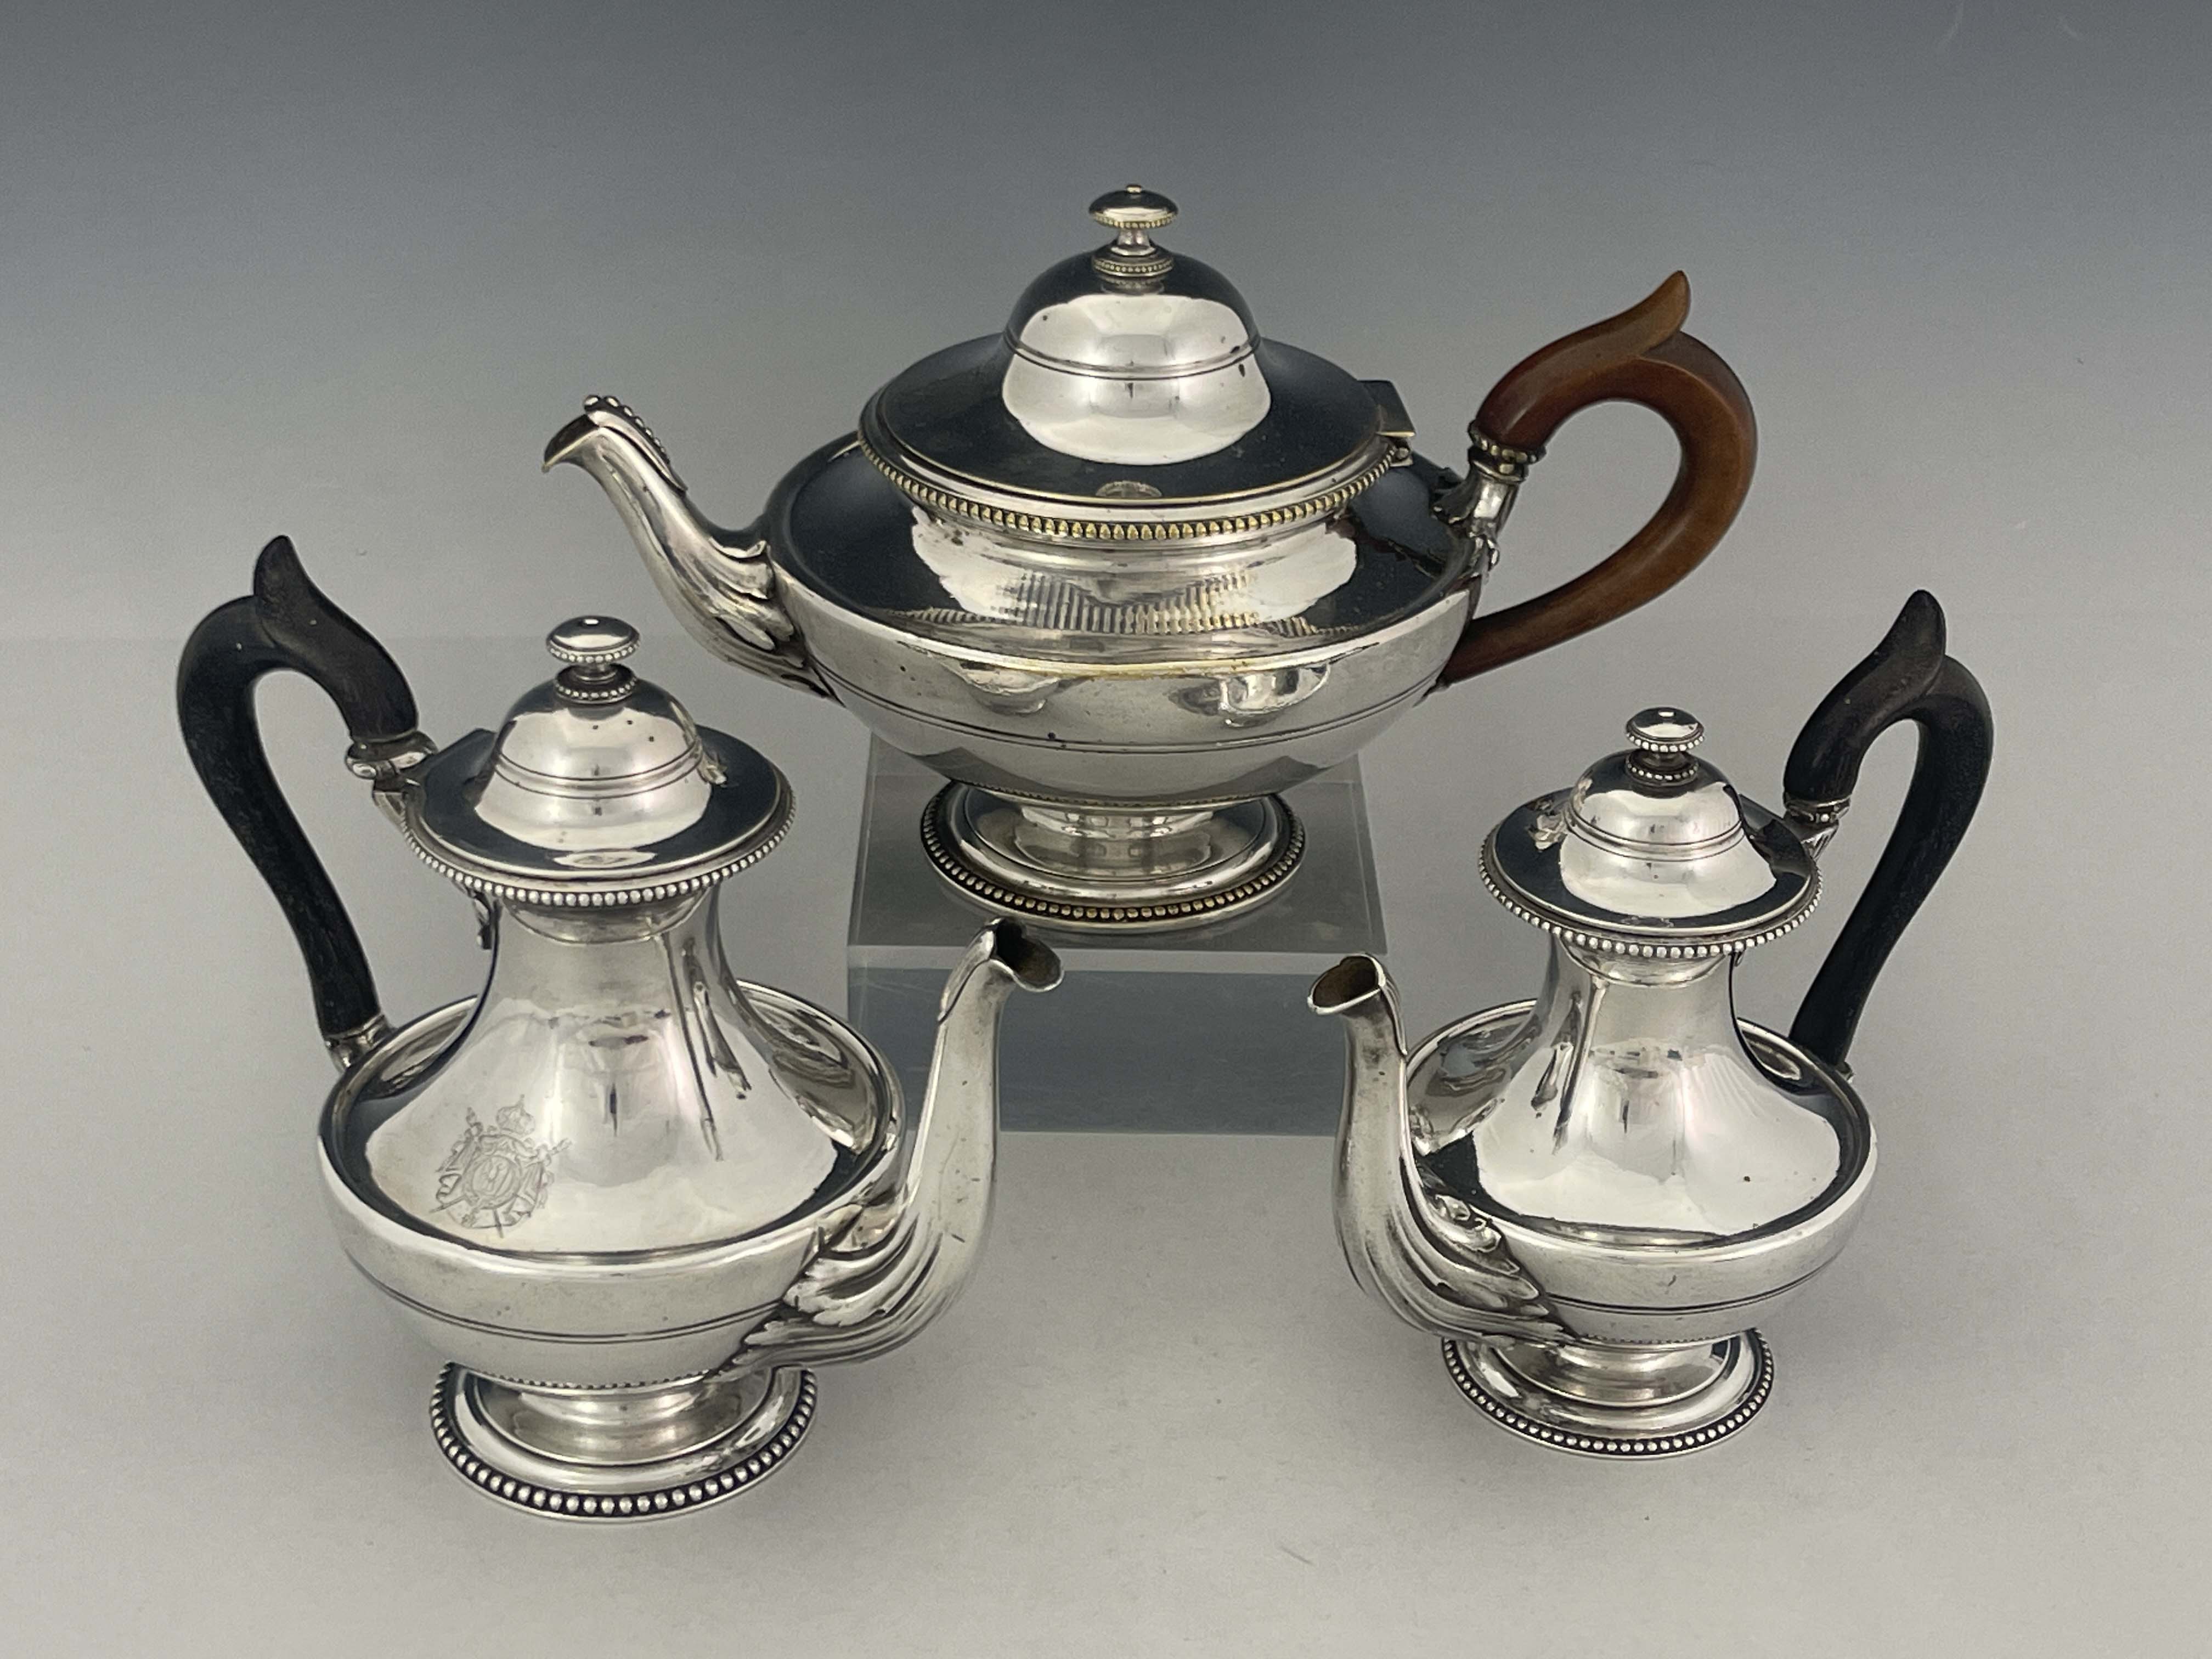 Service de la Maison de l'Empereur, a Napoleon III silver plated three piece tea and coffee service - Image 6 of 6